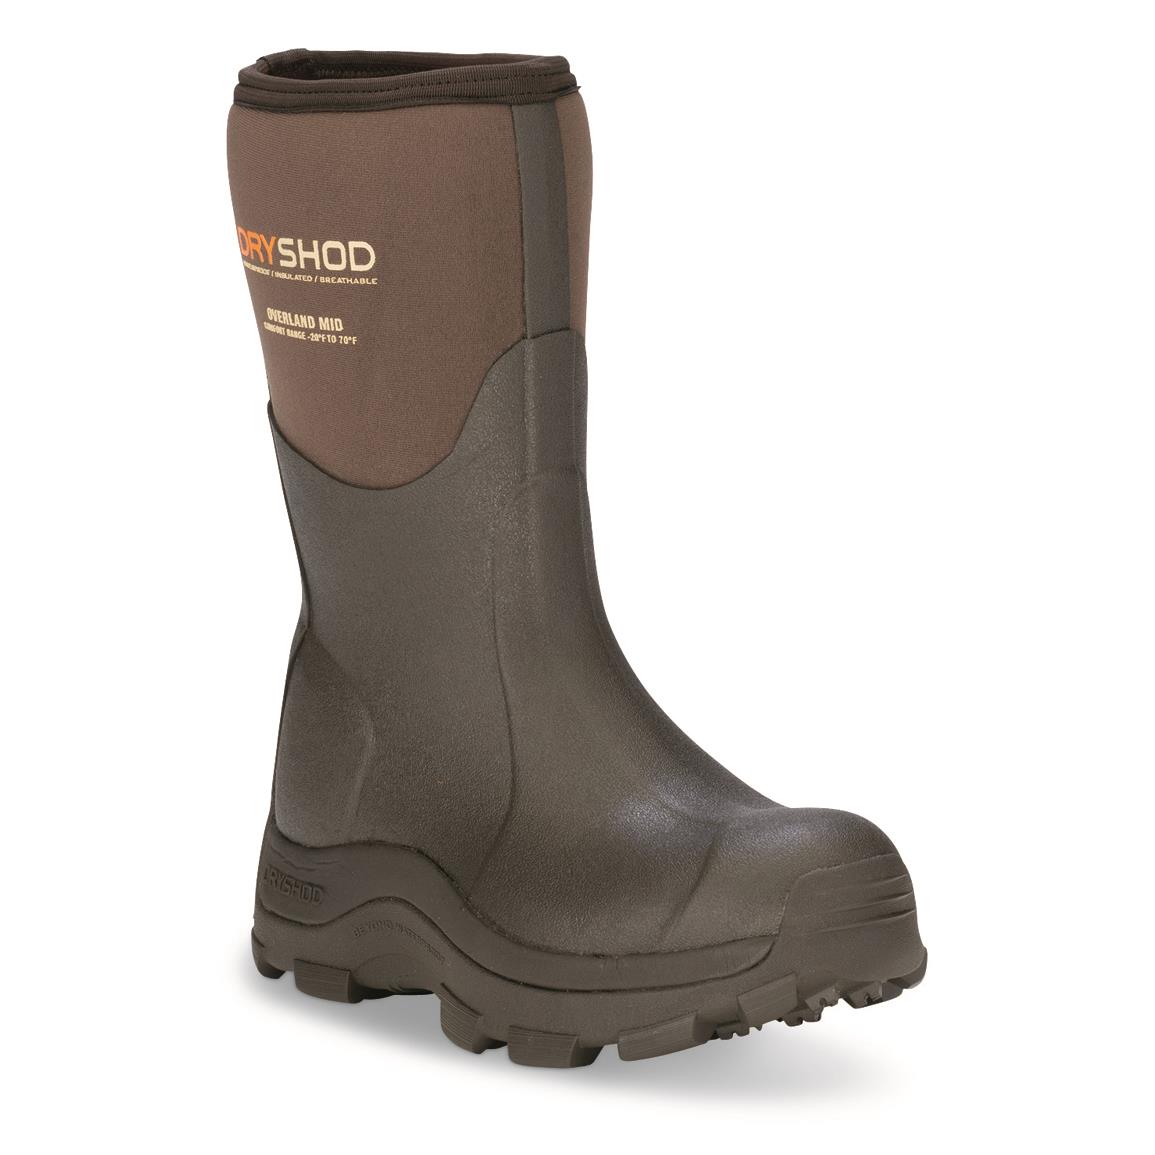 DryShod Overland Mid Premium Women's Neoprene Rubber Sport Boots, -20°F ...